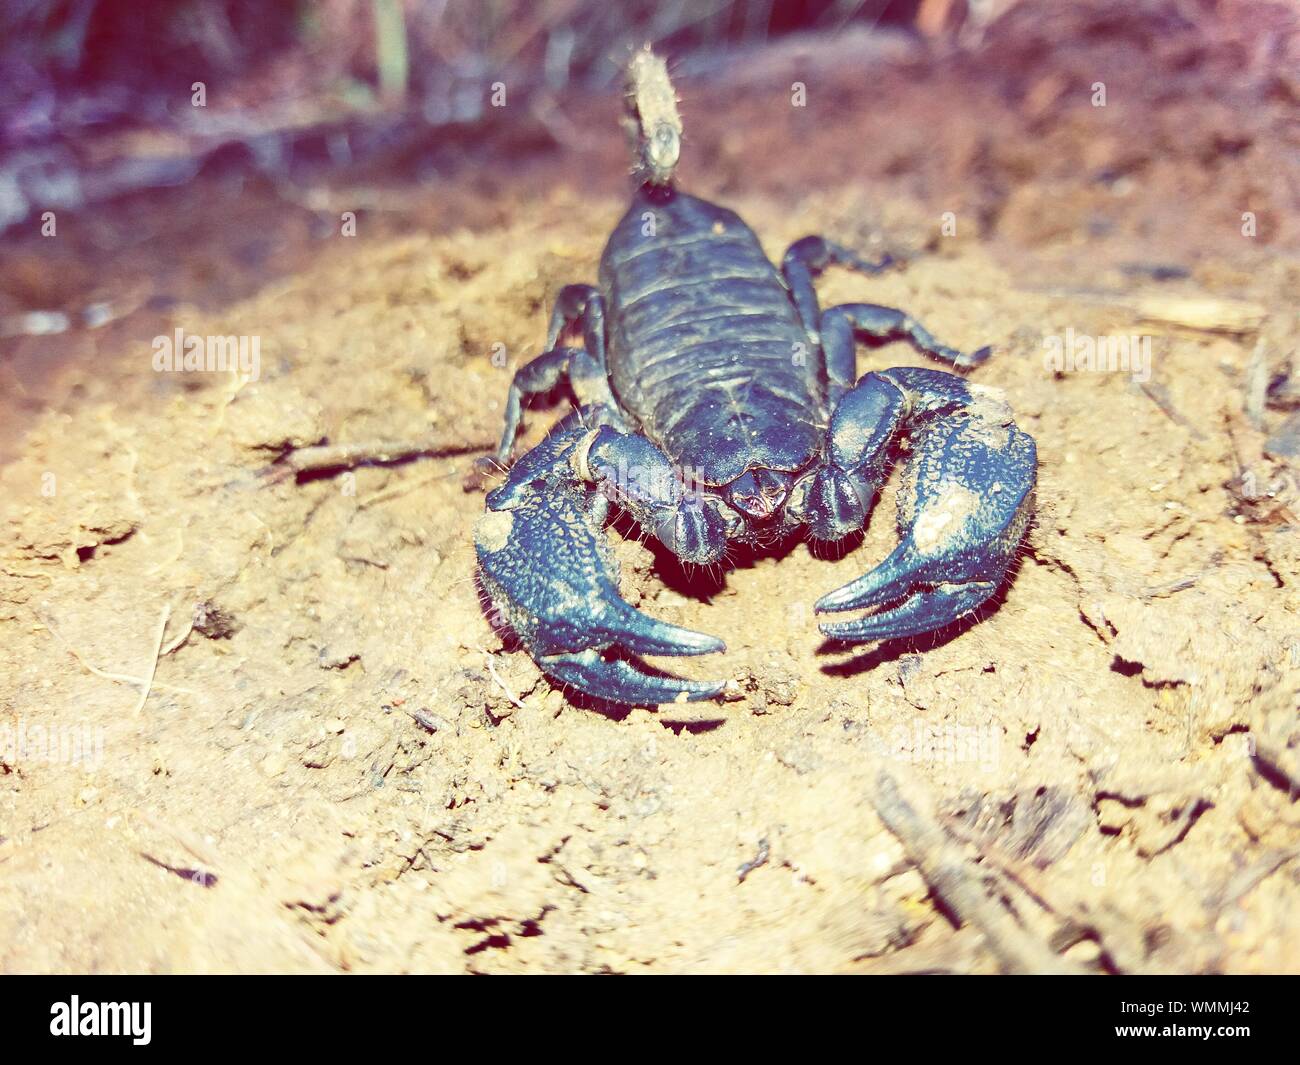 Close-up Of Scorpion On Sand Stock Photo - Alamy